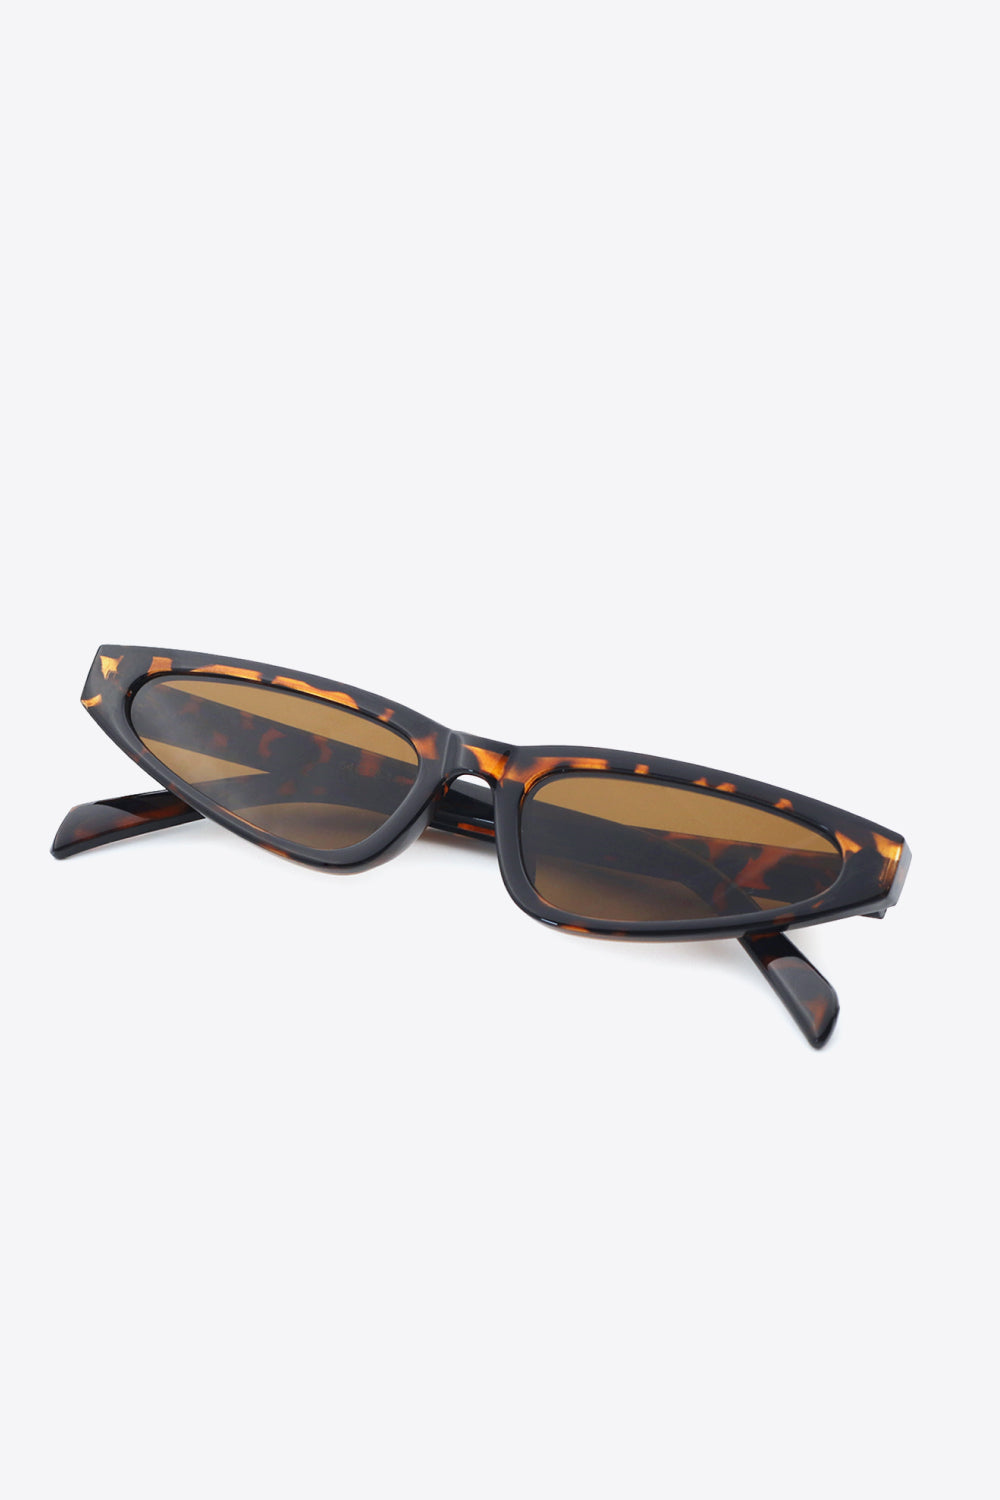 Polycarbonate Frame UV400 Cat Eye Sunglasses - BEAUTY COSMOTICS SHOP